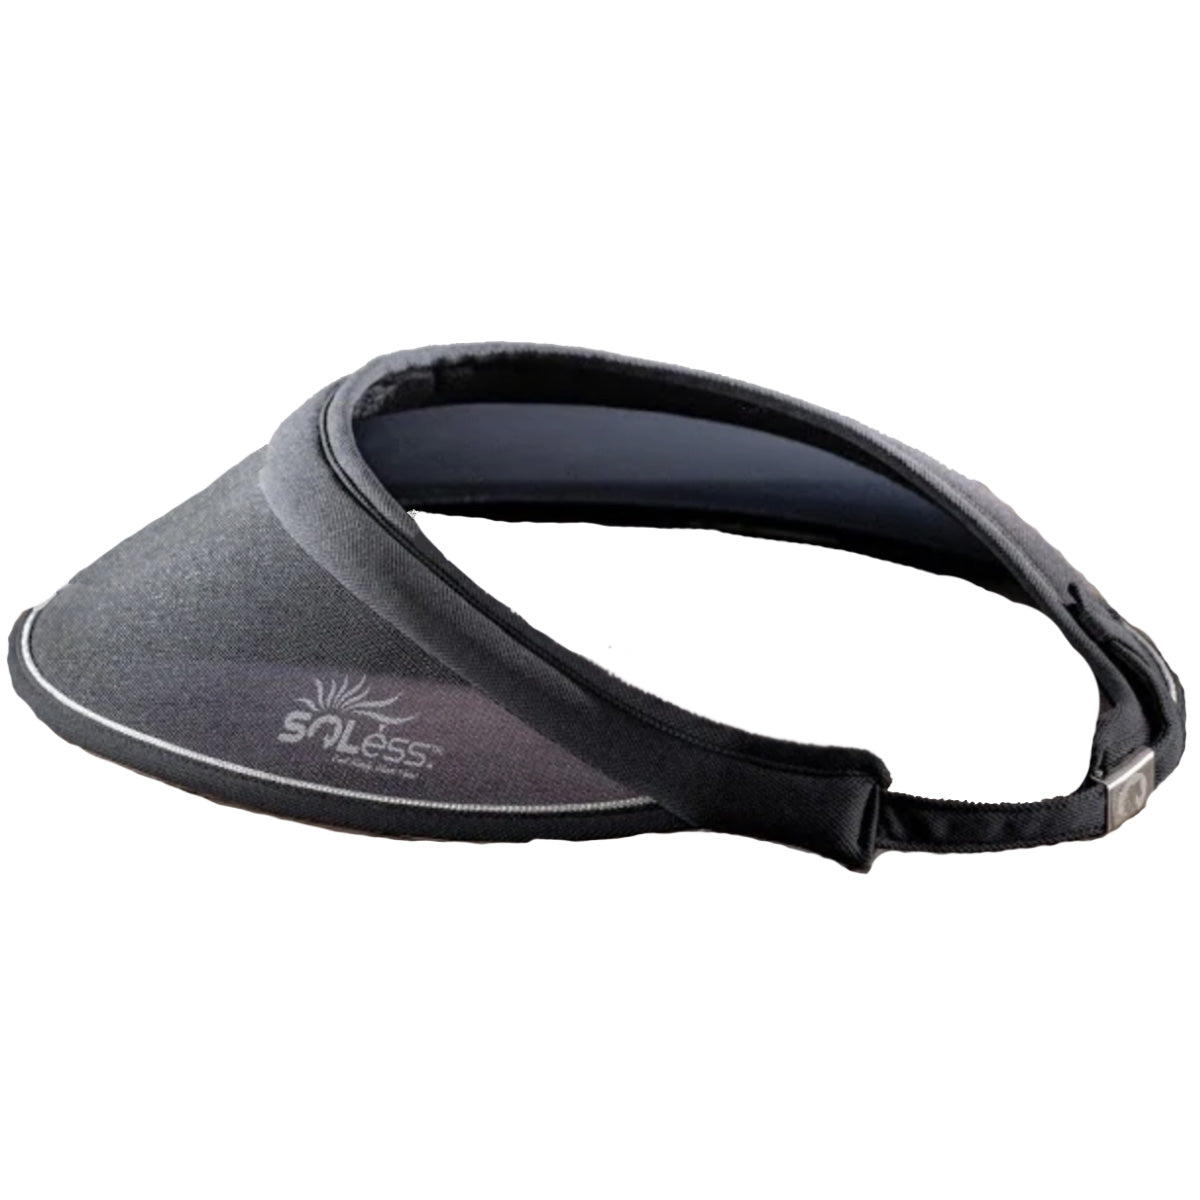 Soless Helmet Visor - Clip Closure